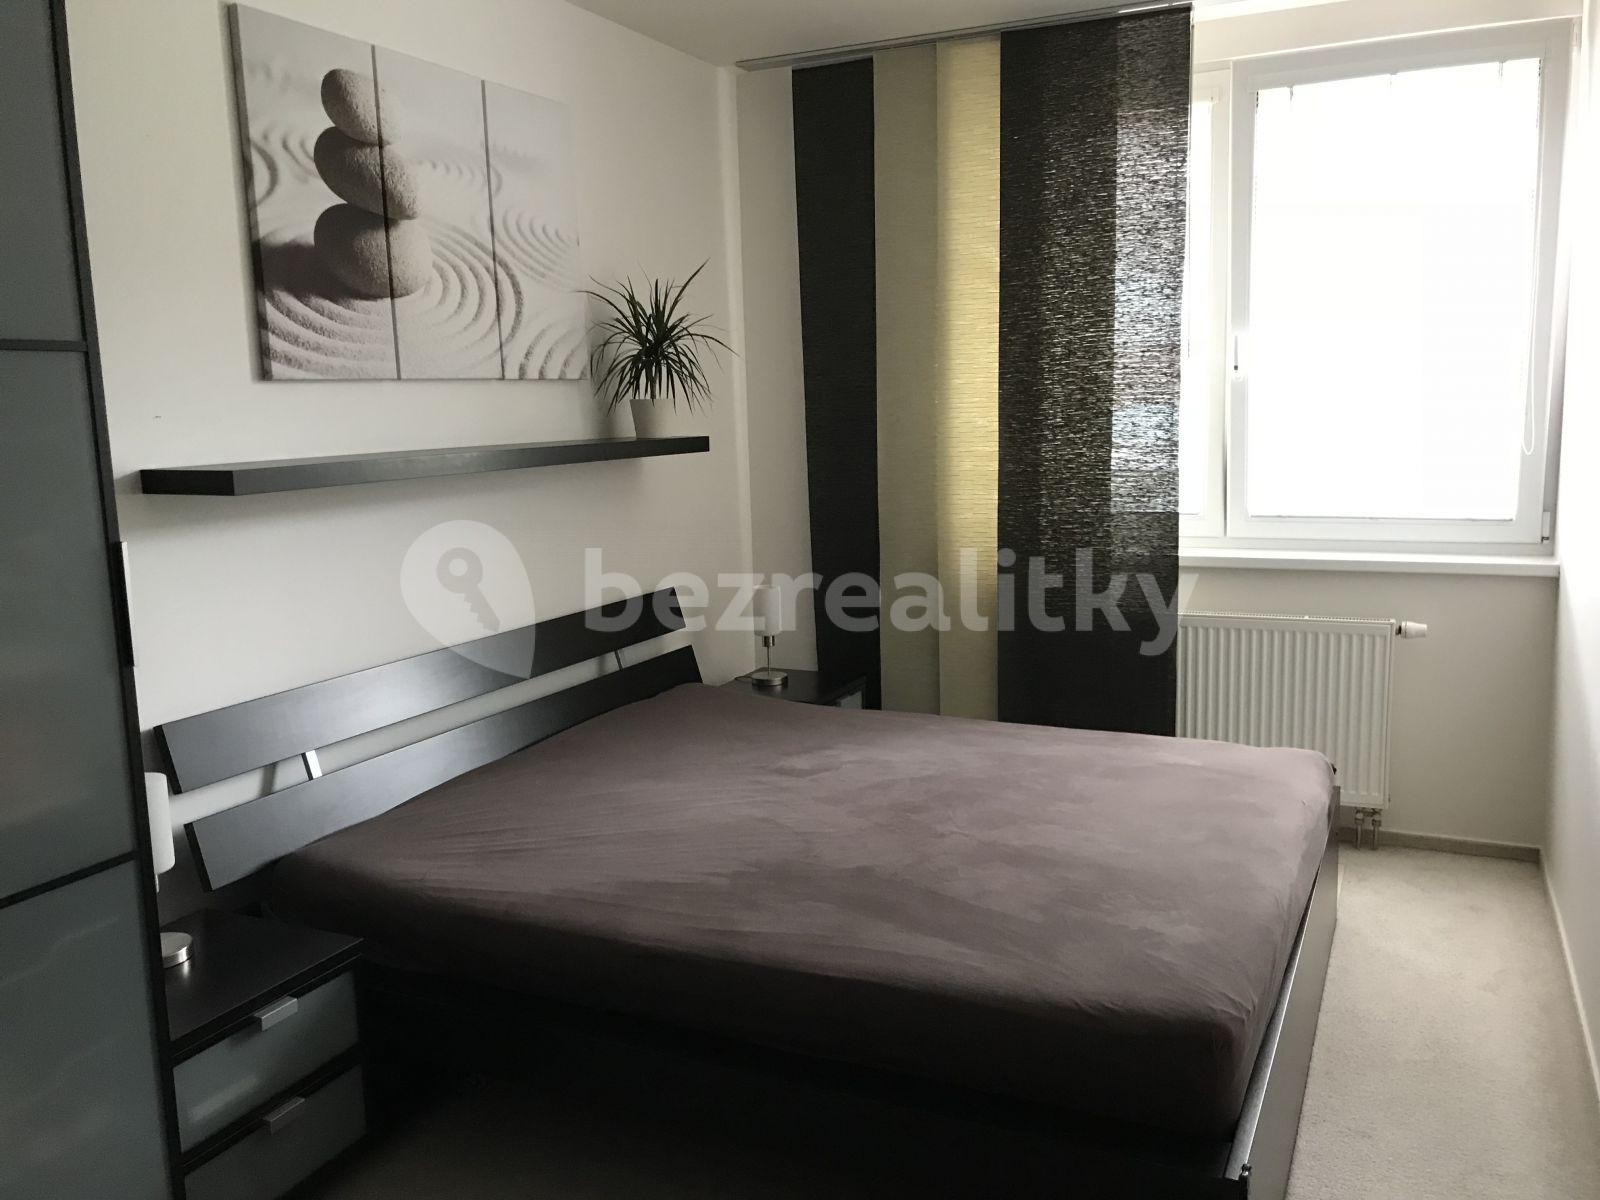 2 bedroom with open-plan kitchen flat to rent, 74 m², Laurinova, Prague, Prague